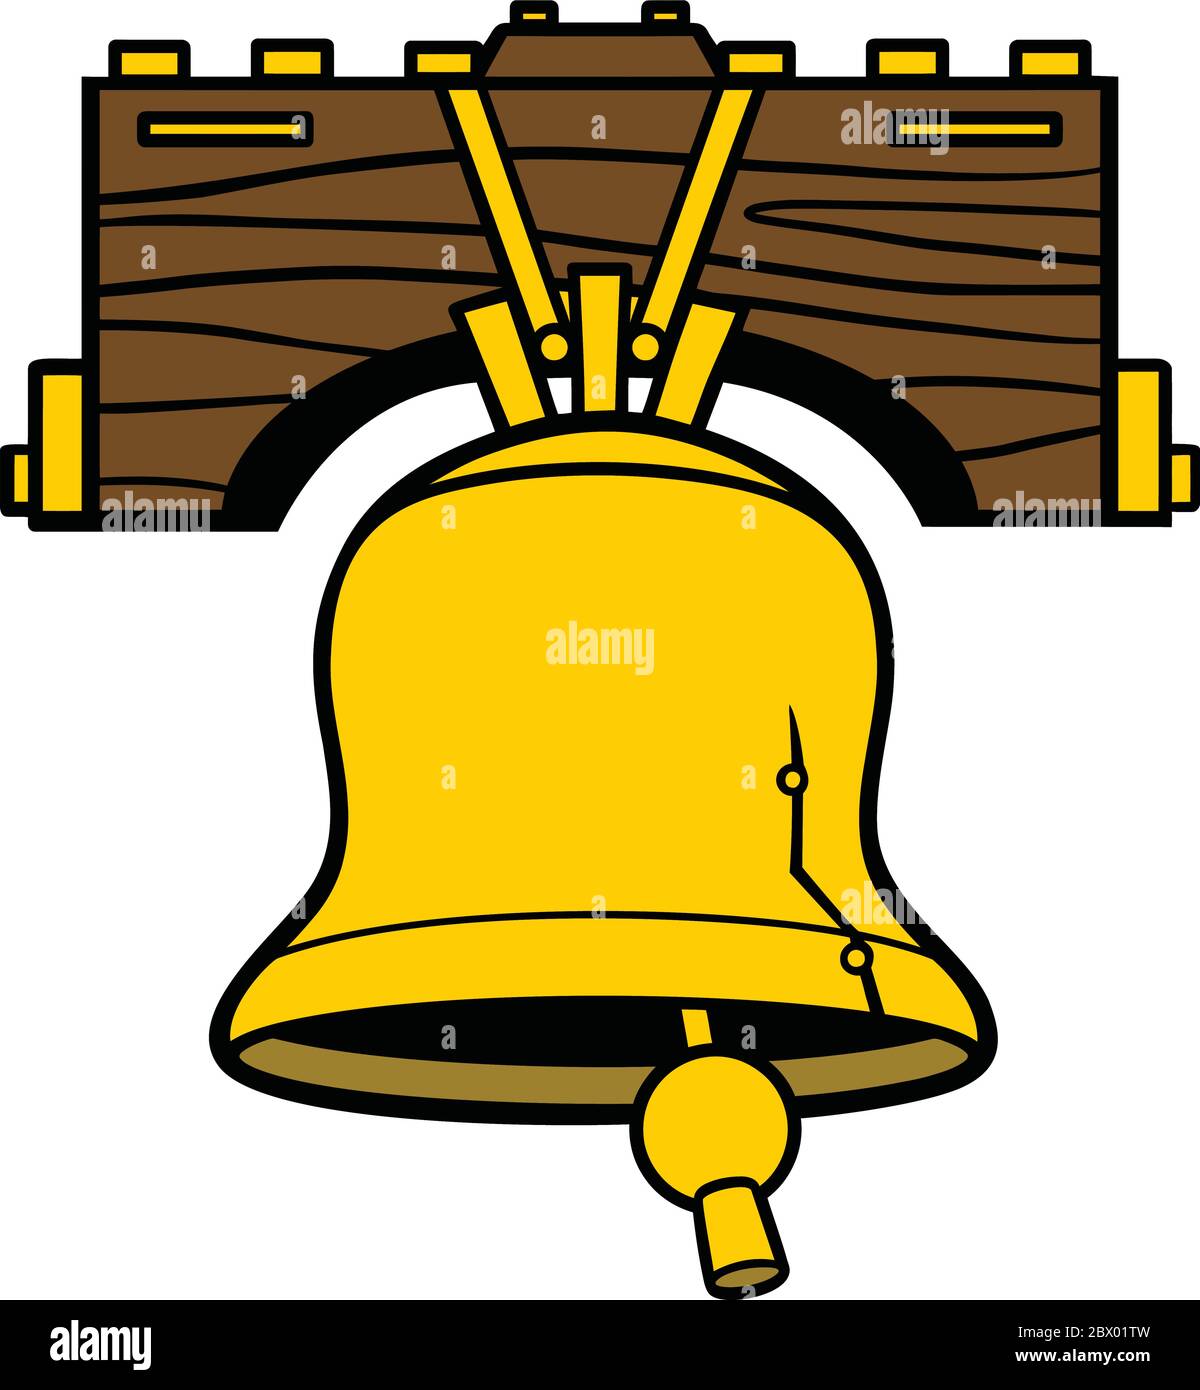 Liberty Bell Ring - eine Illustration eines Liberty Bell Klingens. Stock Vektor